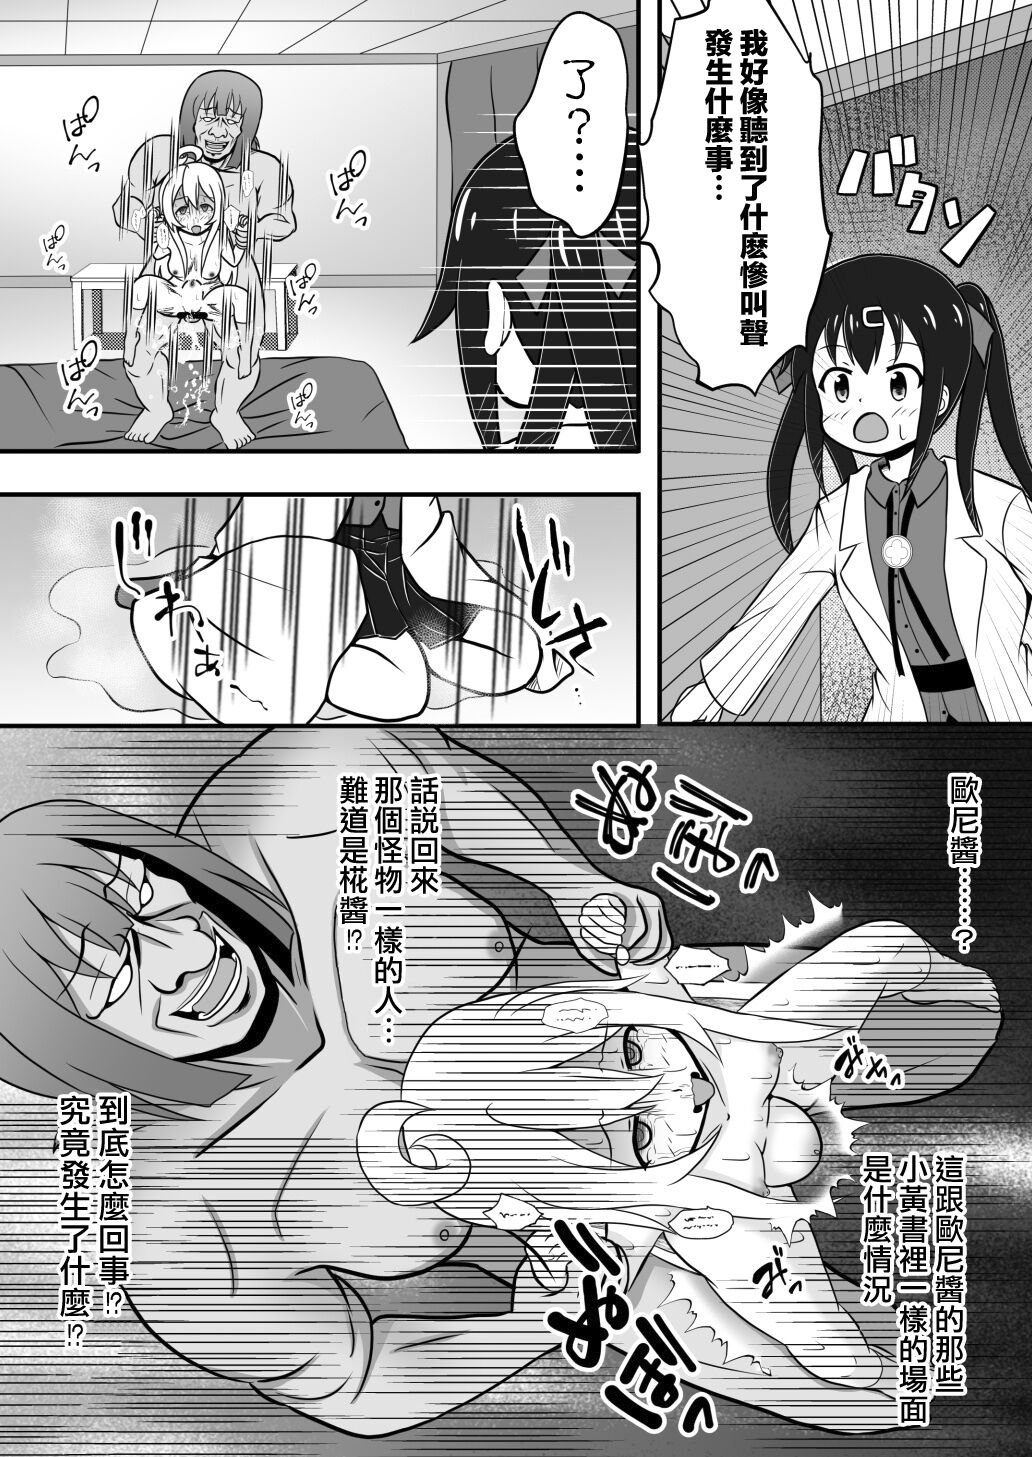 Onimai Ero Manga（EX)(Traditional Chinese)/別當歐尼醬了【閲覽注意】 おにまいエロ漫画EX/別醬了小黃漫EX(咕鴿翻譯)【閲覽注意】